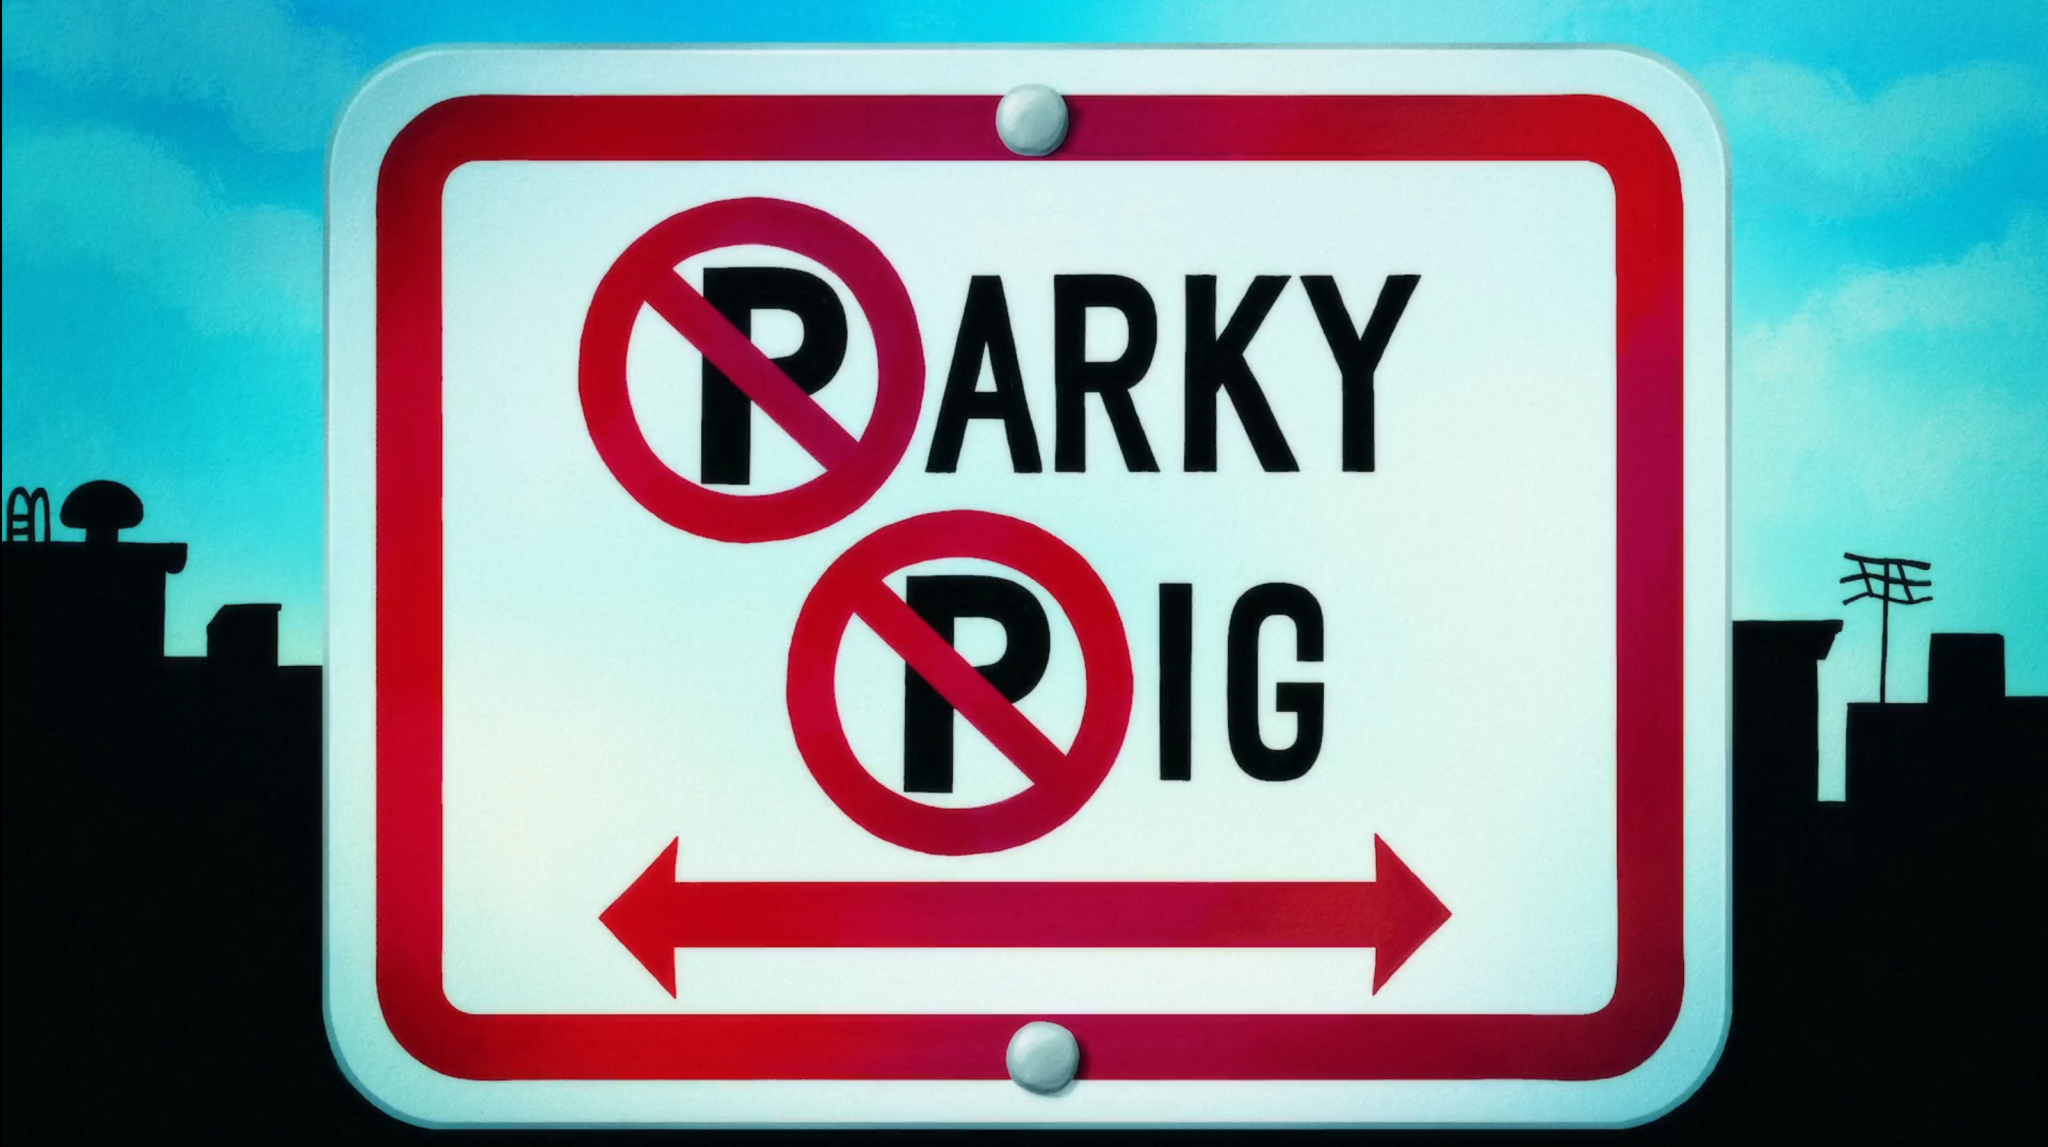 Parky Pig title card